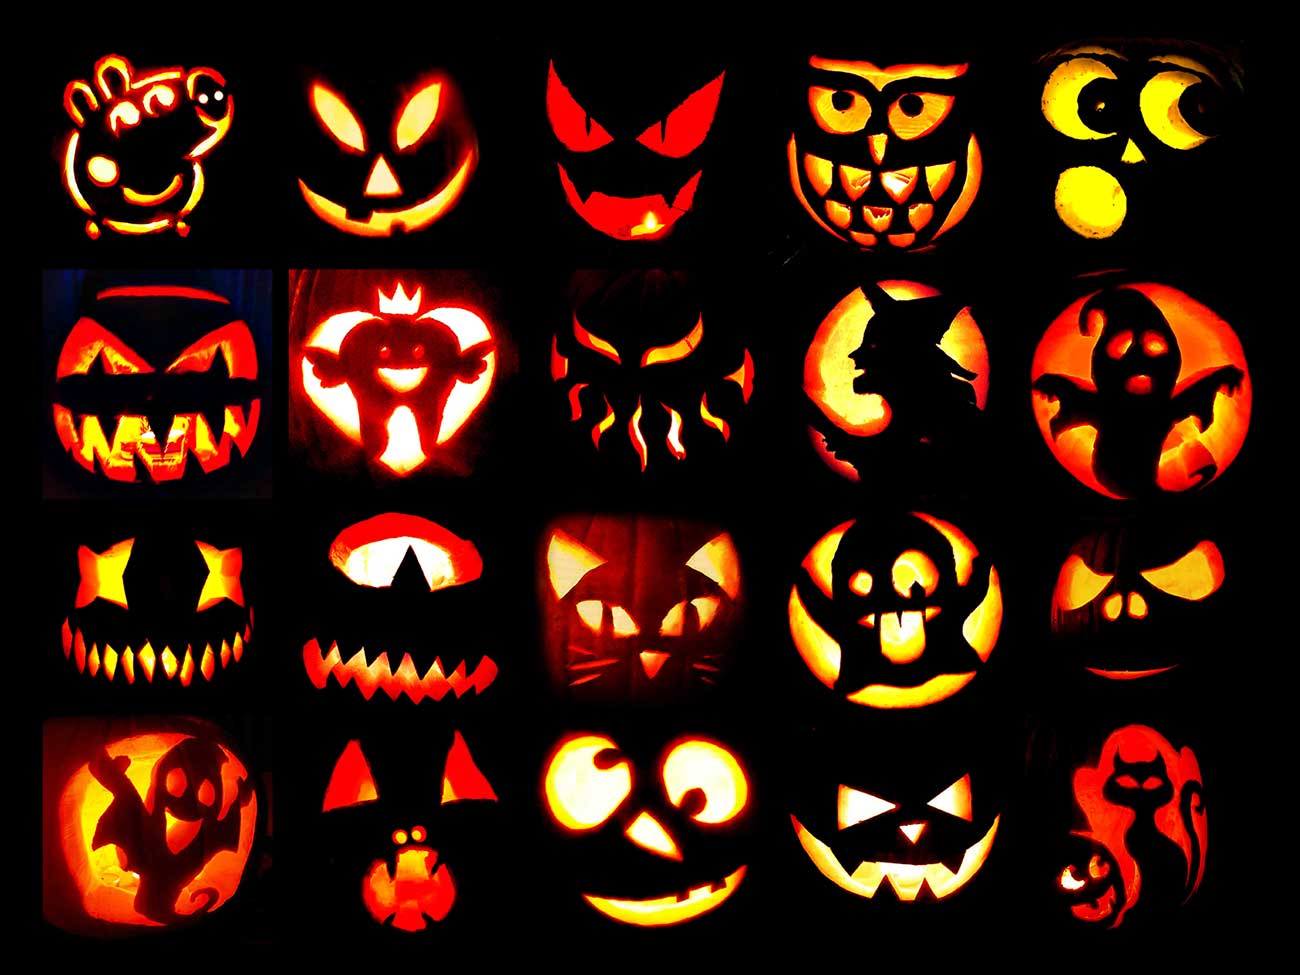 25-halloween-simple-pumpkin-carving-ideas-2020-for-kids-beginners